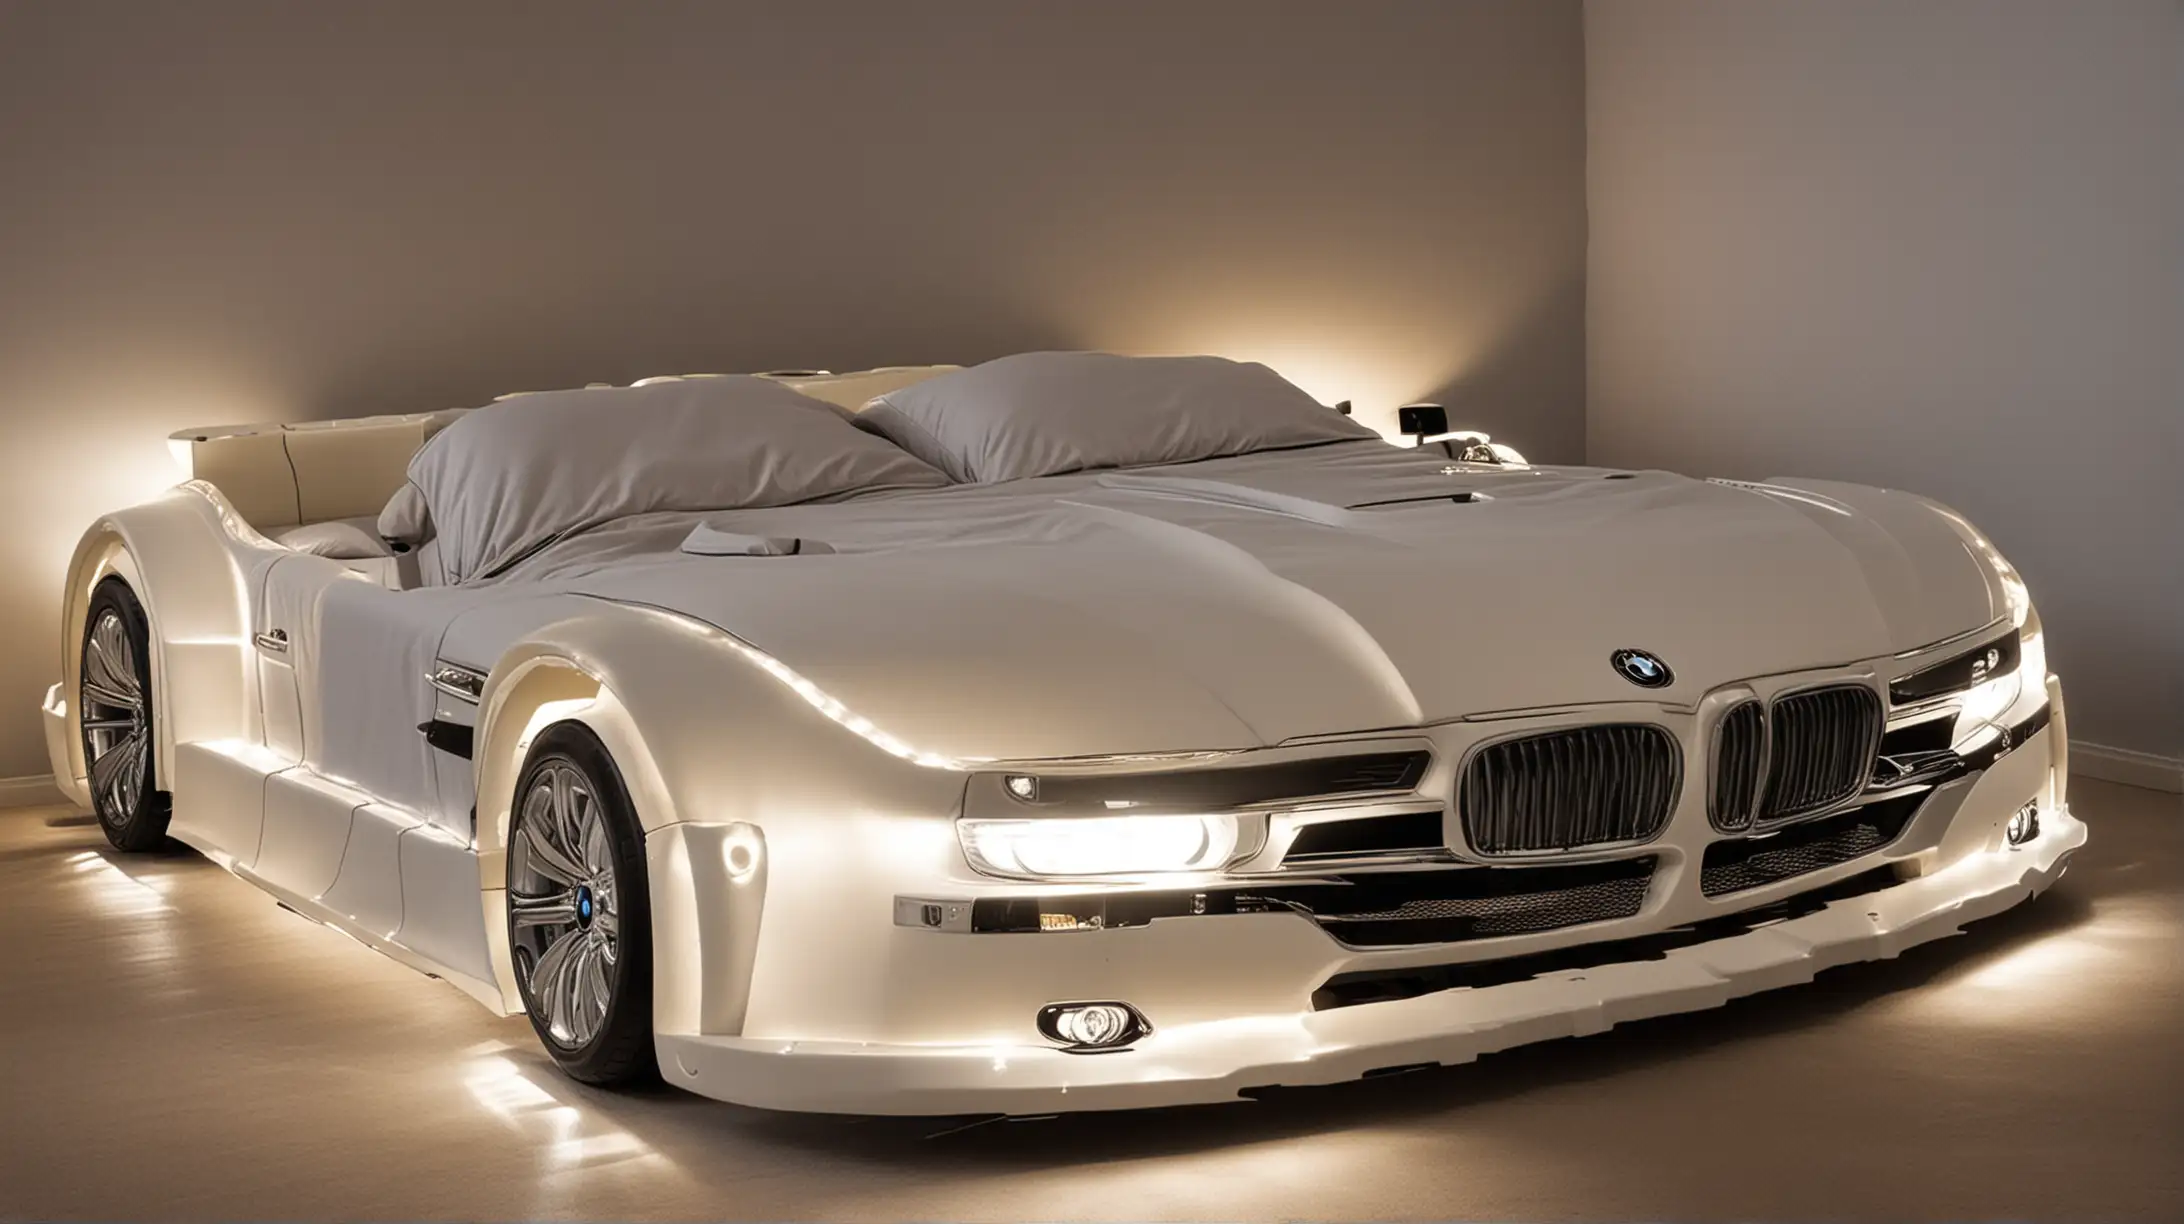 Luxury Double Bed Shaped like BMW Car with Illuminated Headlights